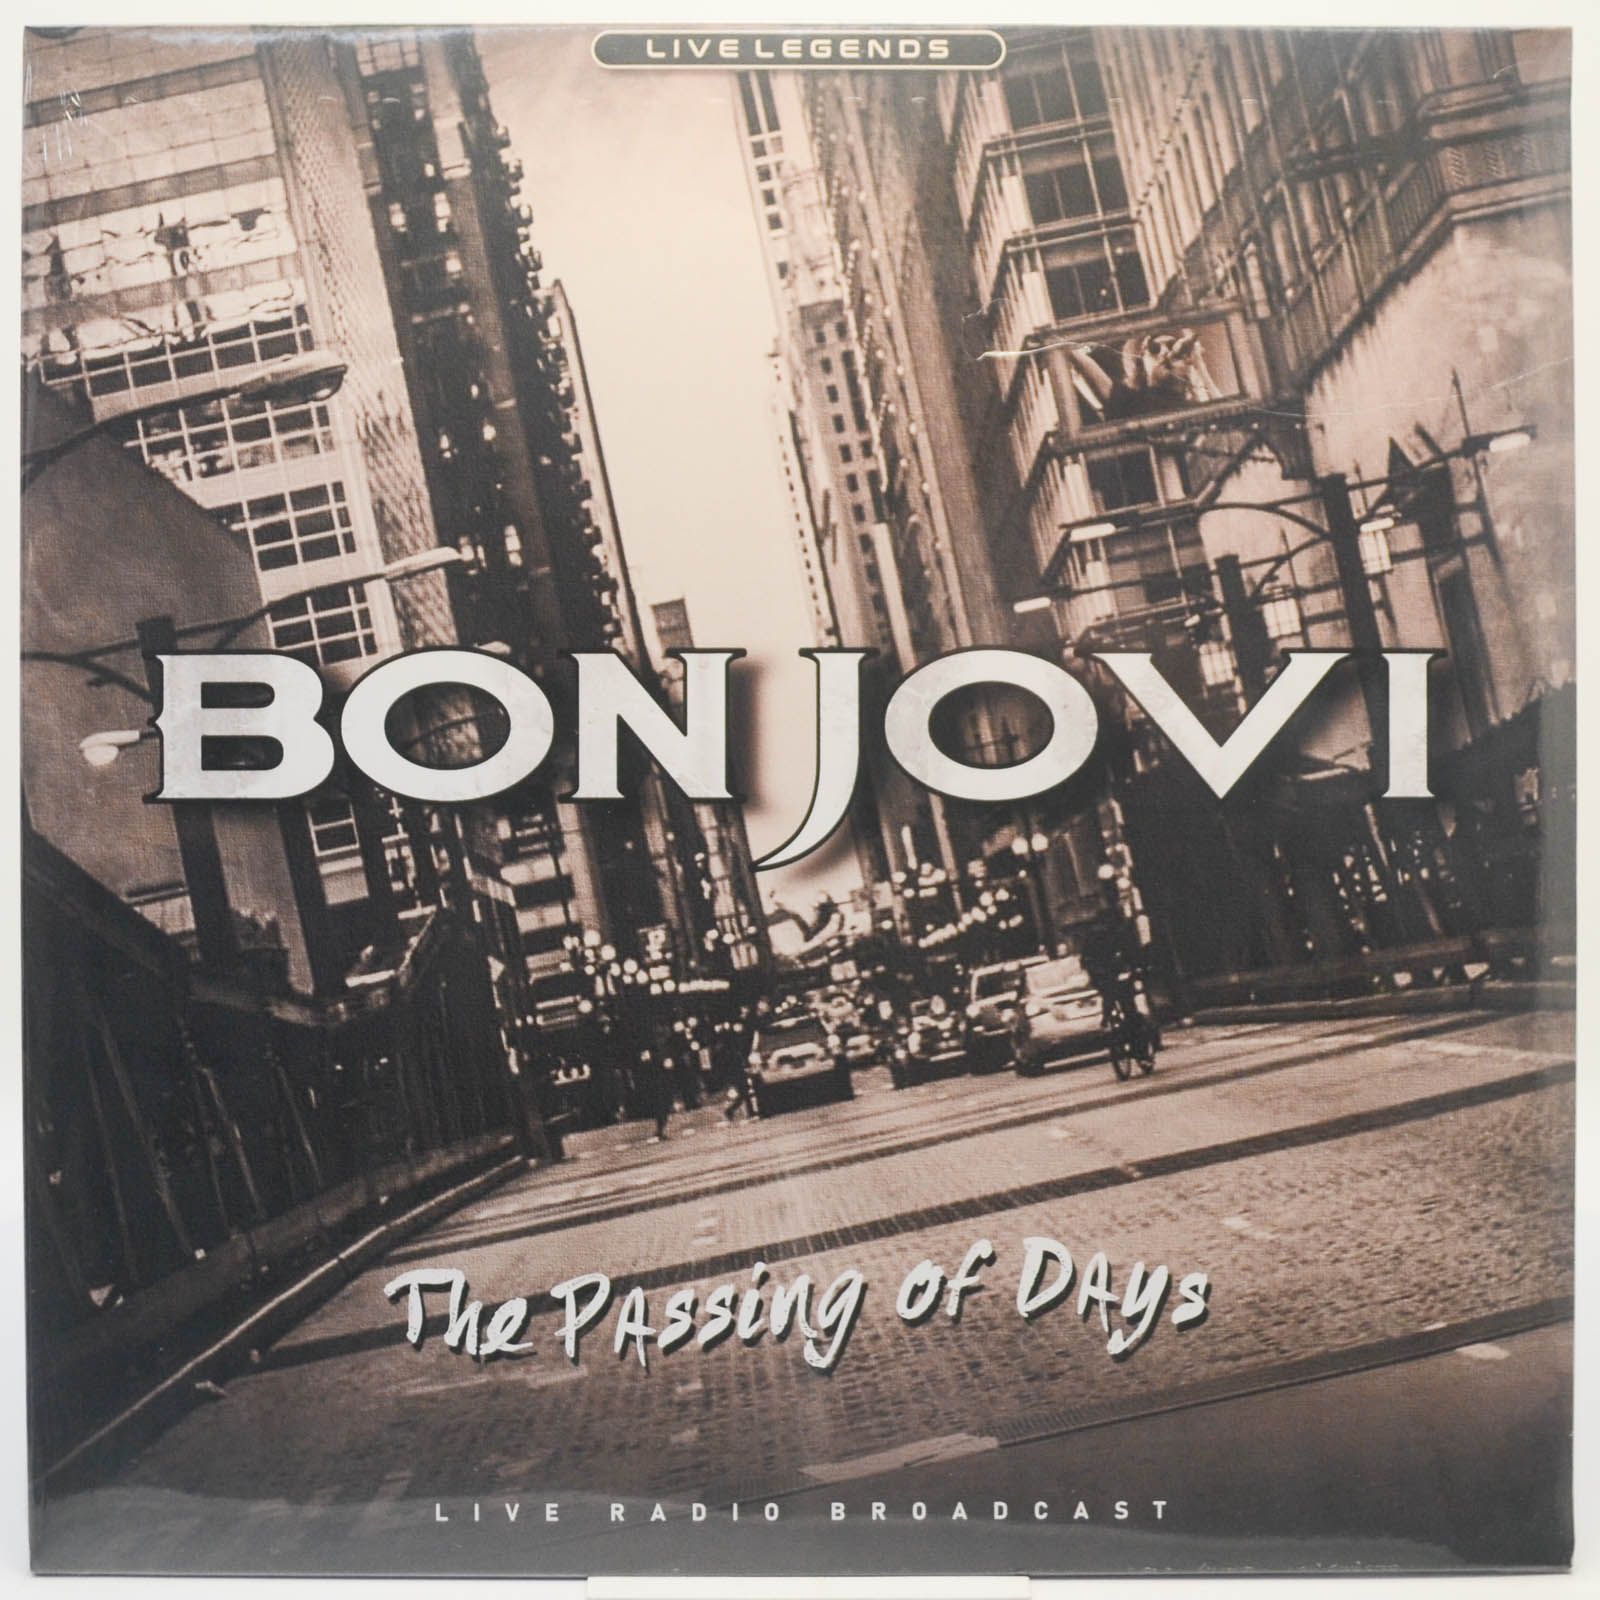 Bon Jovi — The Passing Of Days (Live Radio Broadcast), 2020